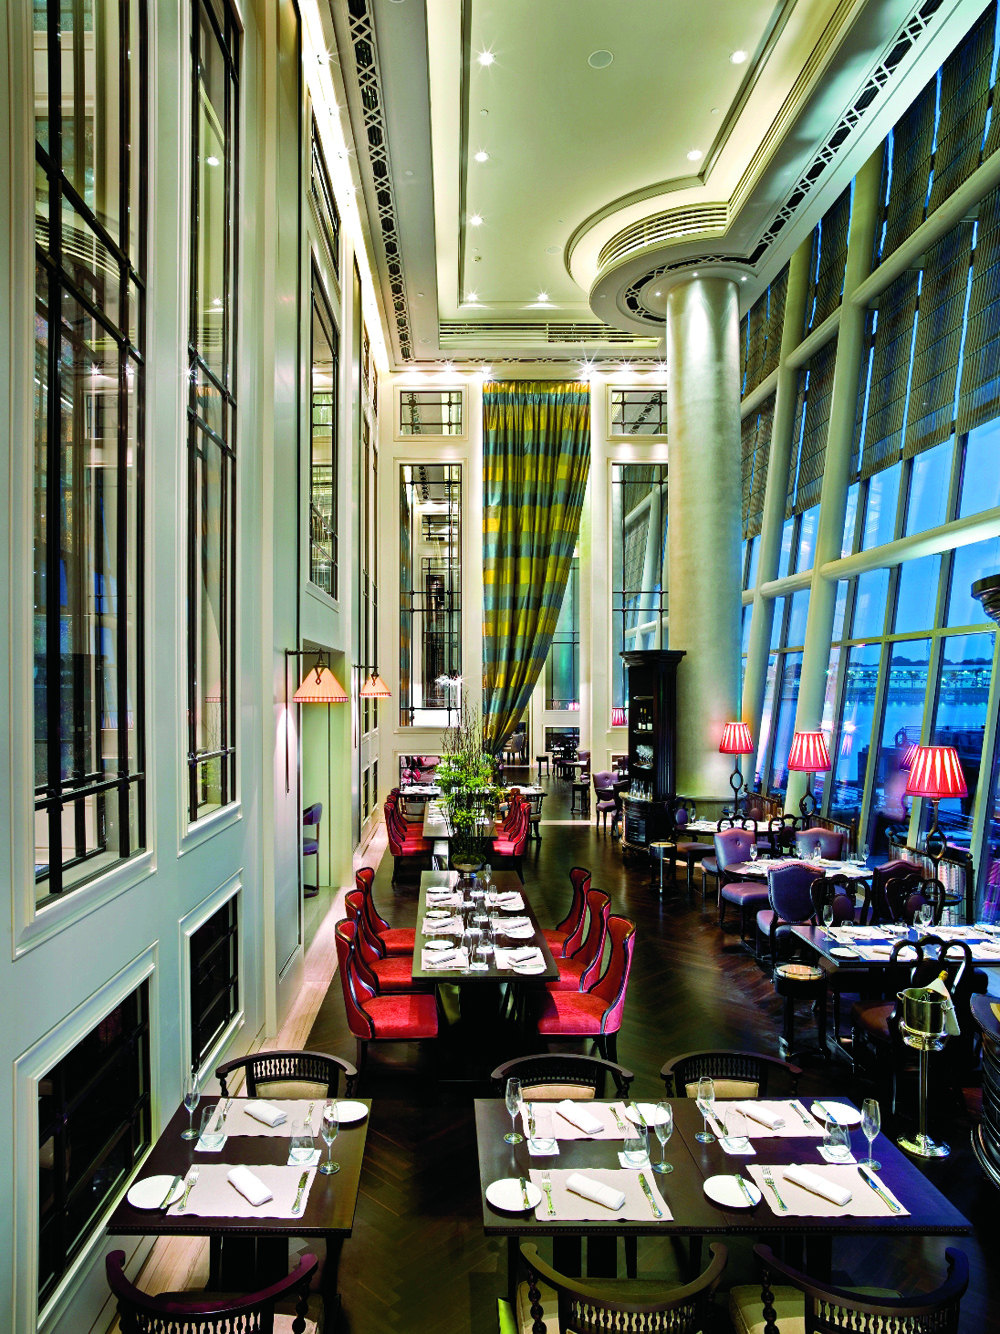 新加坡富尔顿海湾酒店( The Fullerton Bay Hot )(AFSO+LCL)第四页有..._新加波The Fullerton Bay Hotel Singapore- Clifford.jpg